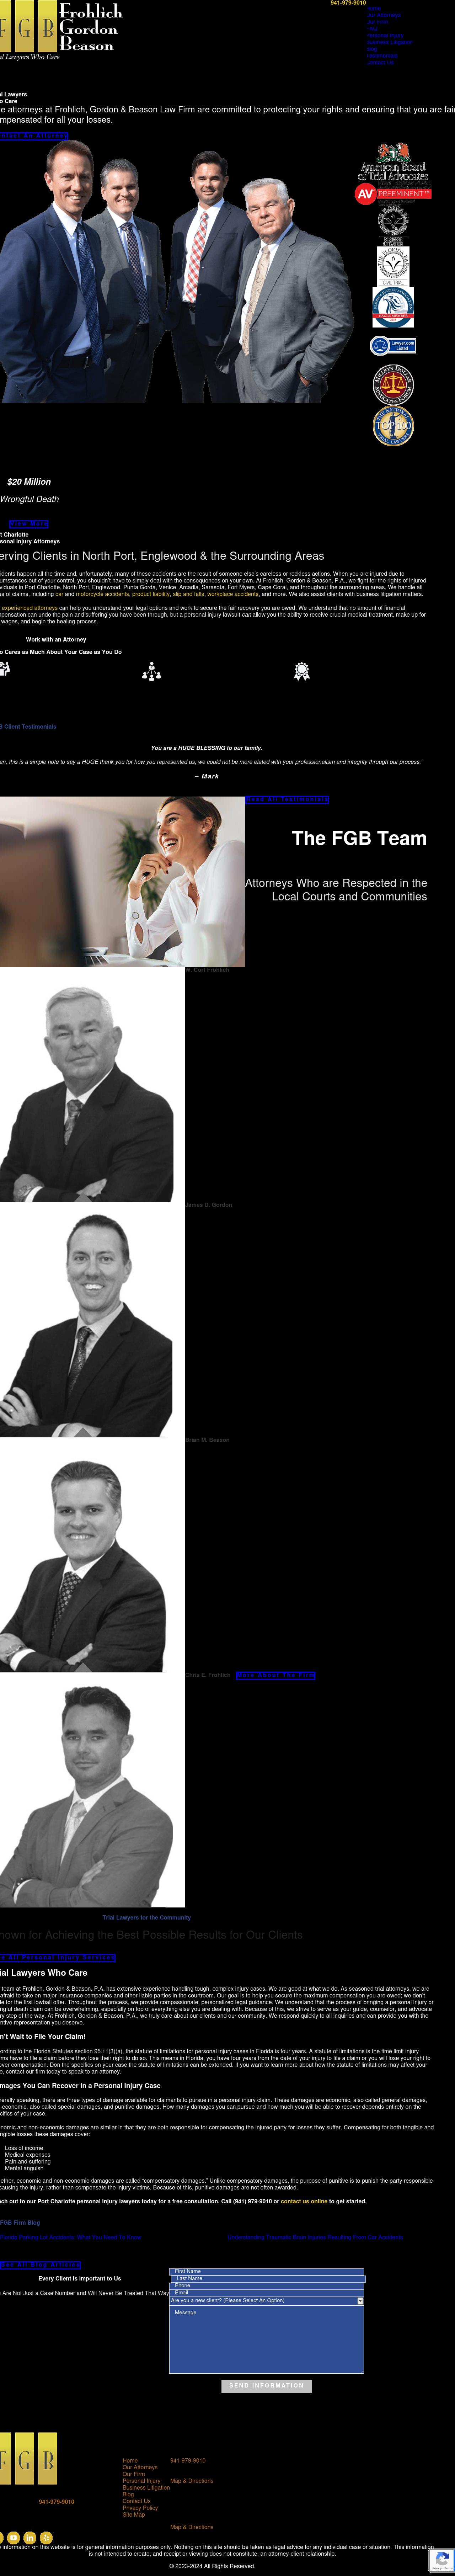 Frohlich, Gordon & Beason, P.A. - Port Charlotte FL Lawyers